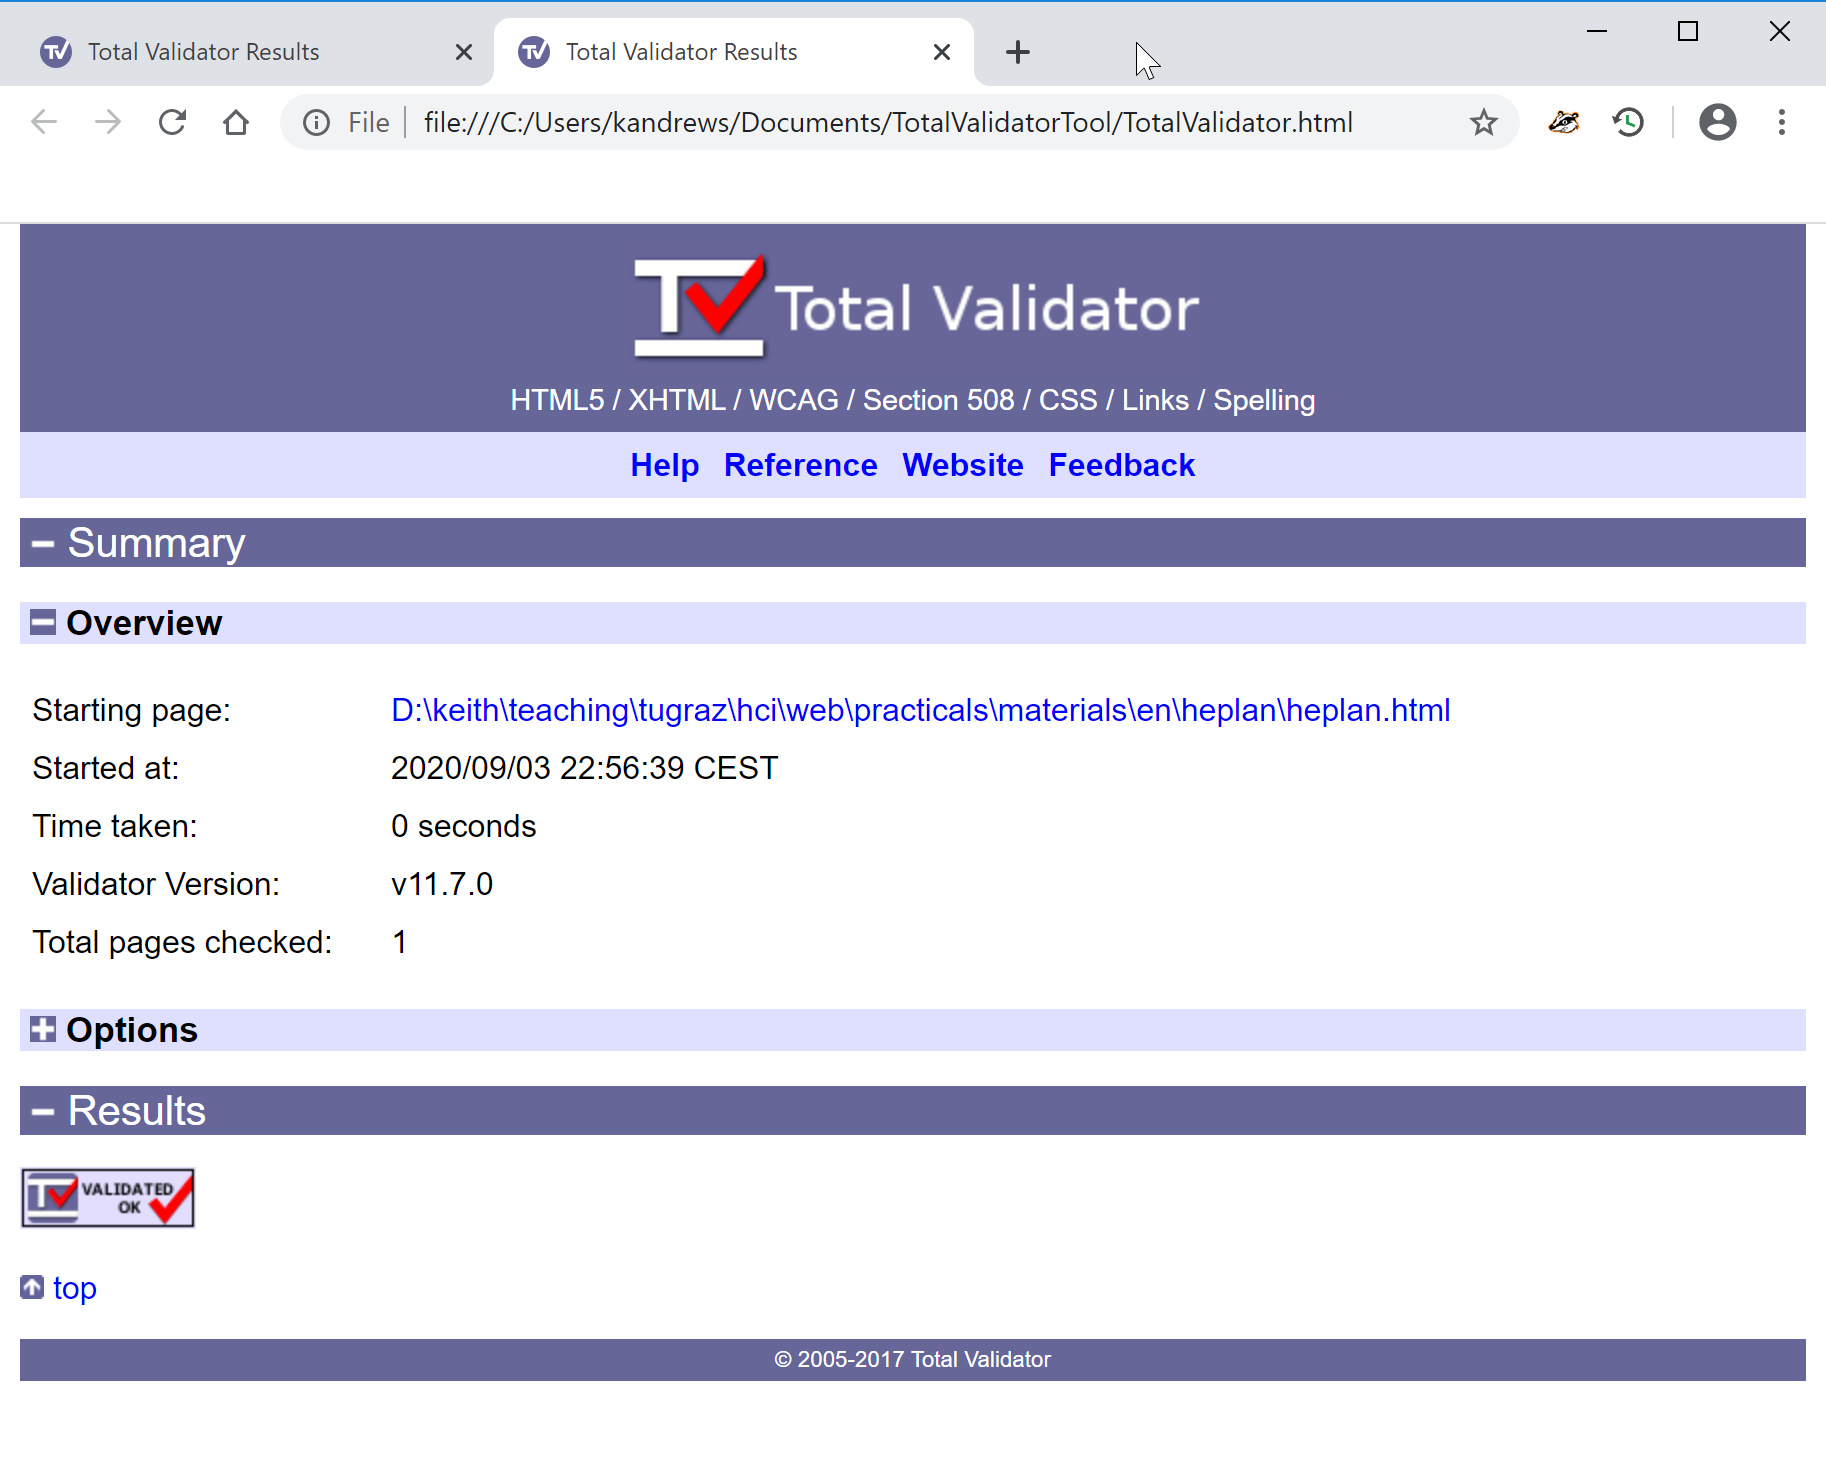 TotalValidator Basic v 11.7.0 Validated OK.